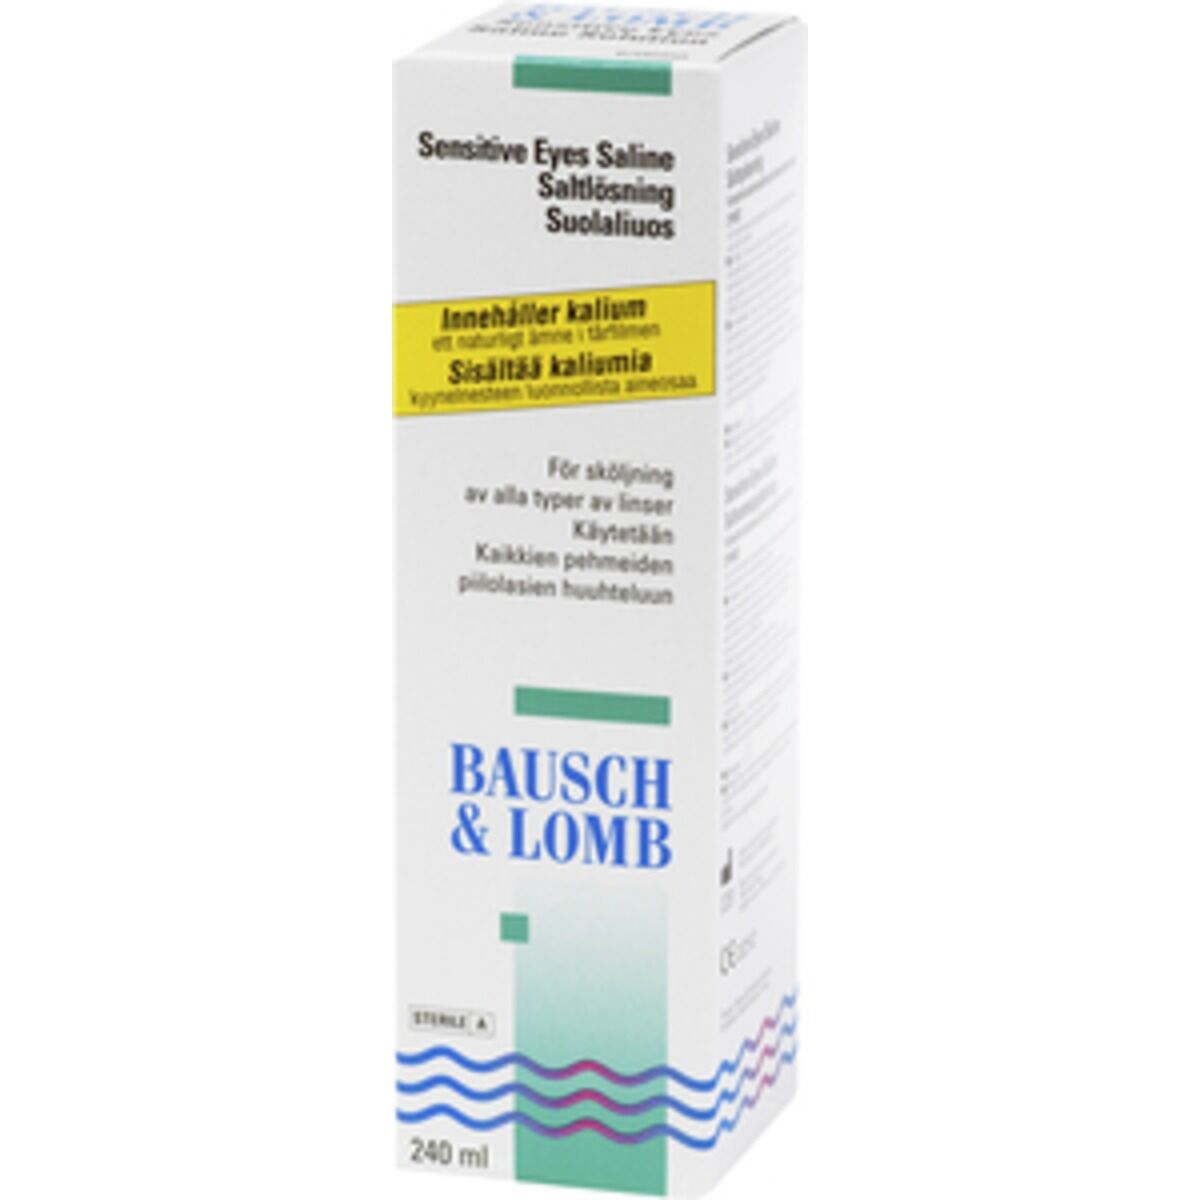 Bausch & Lomb Sensitive Eyes Saltløsning - 240 ml